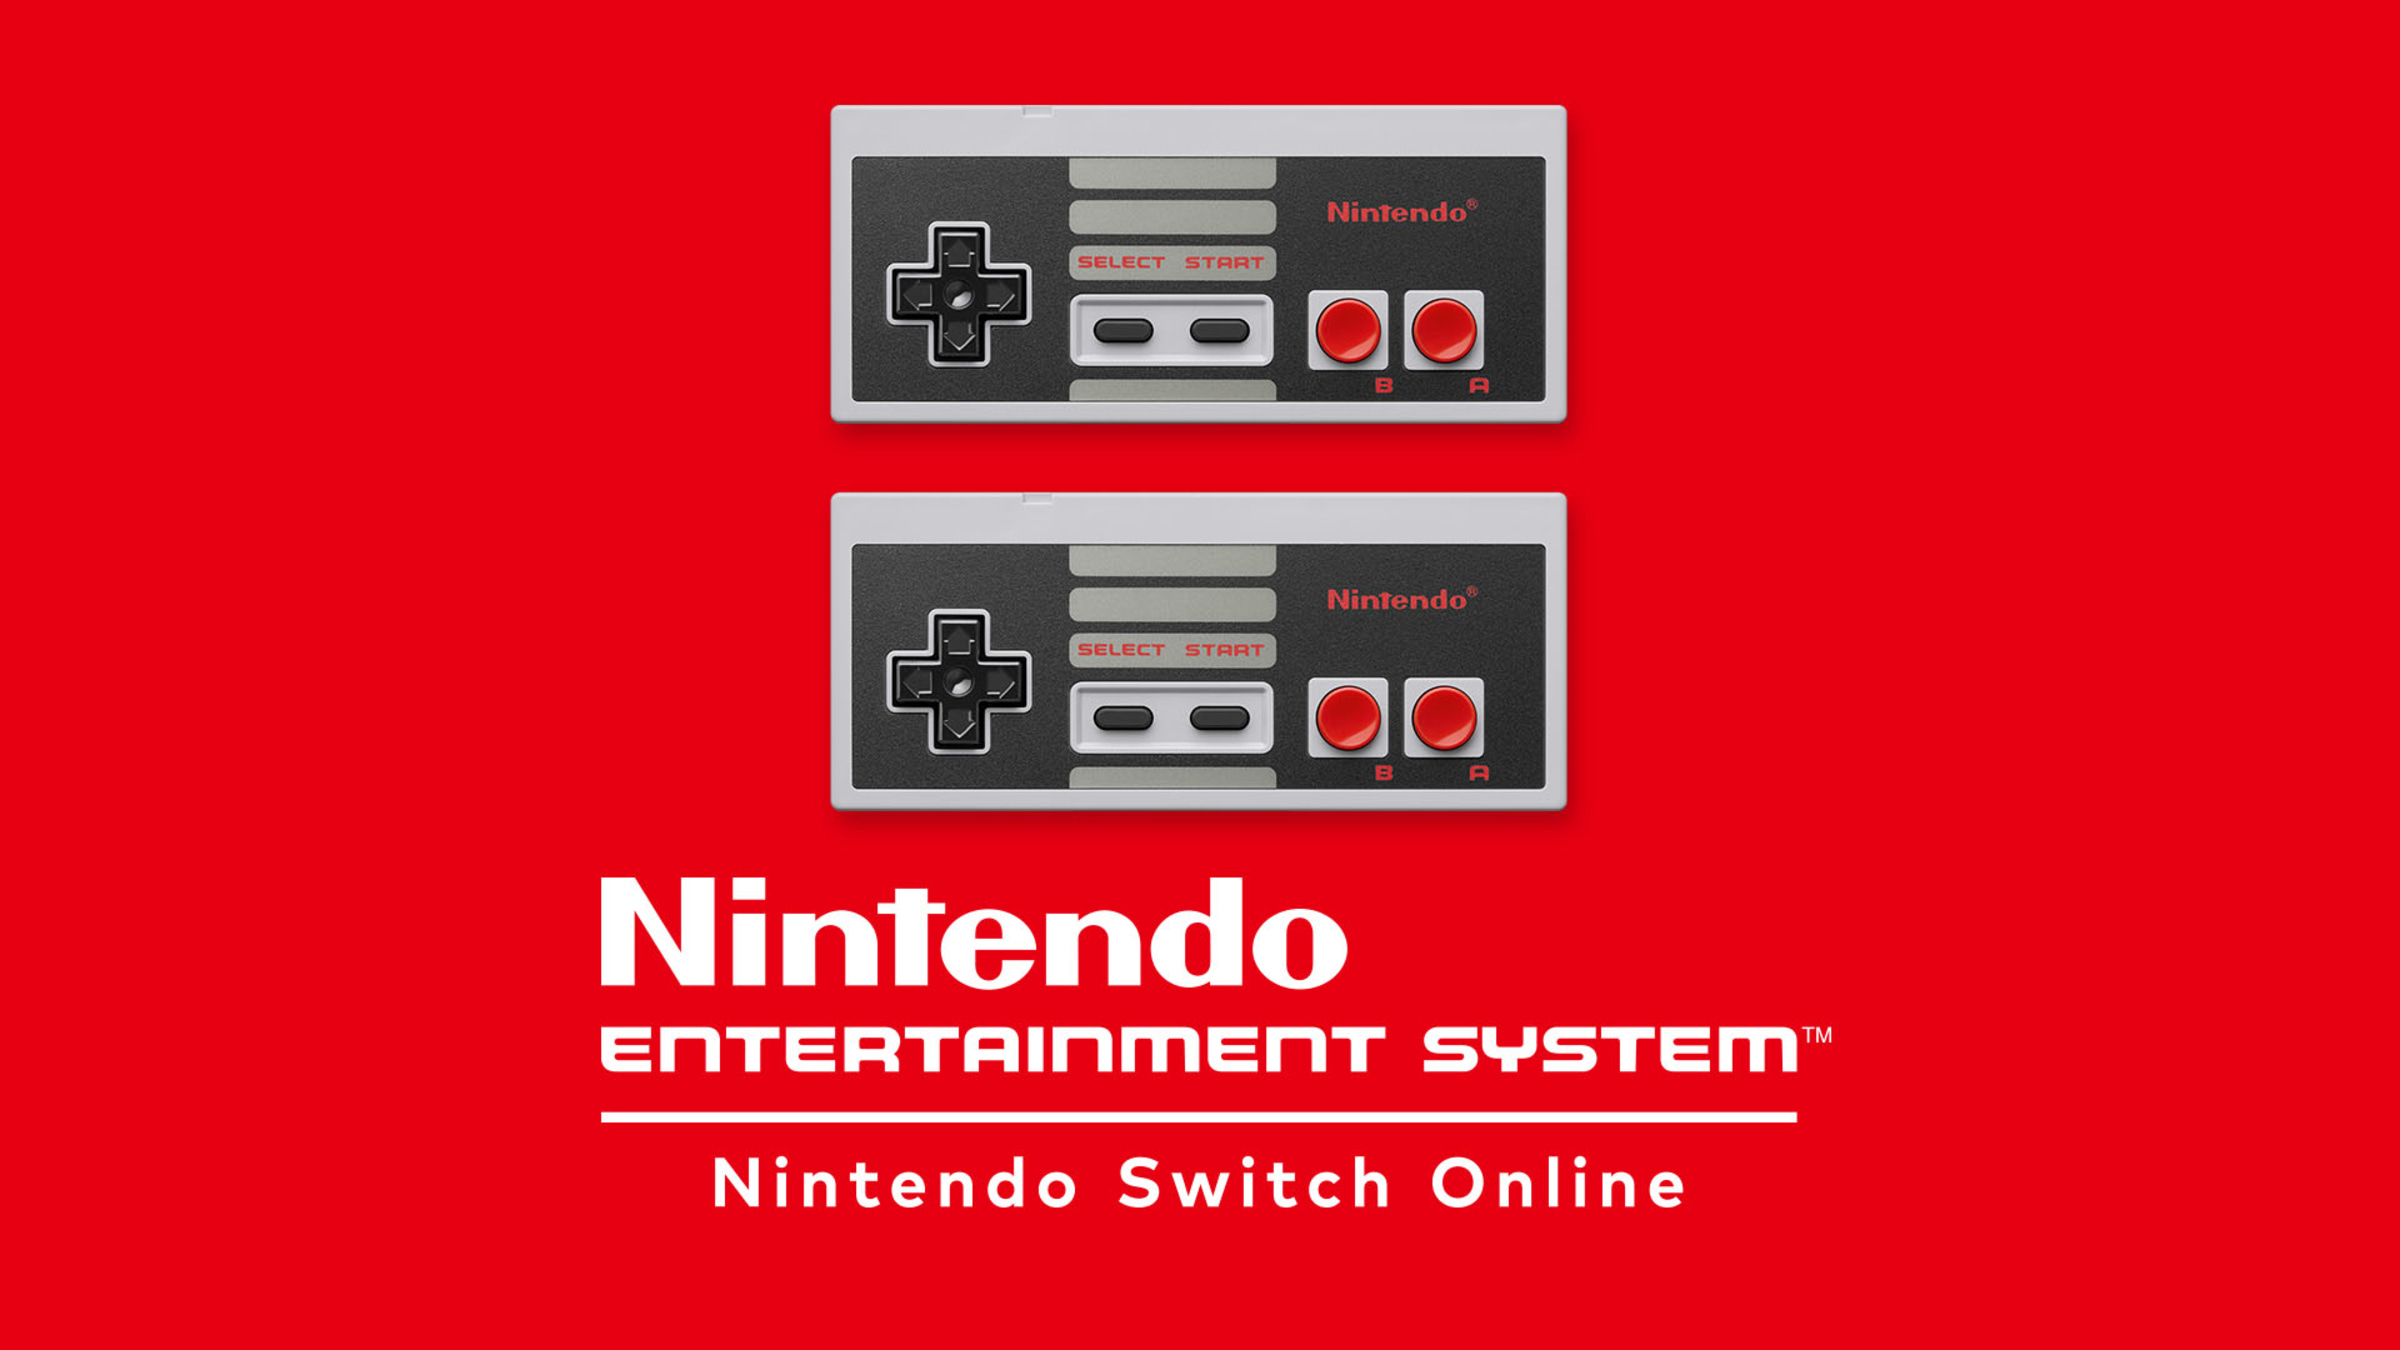 Nintendo Entertainment System™ - Nintendo Switch Online